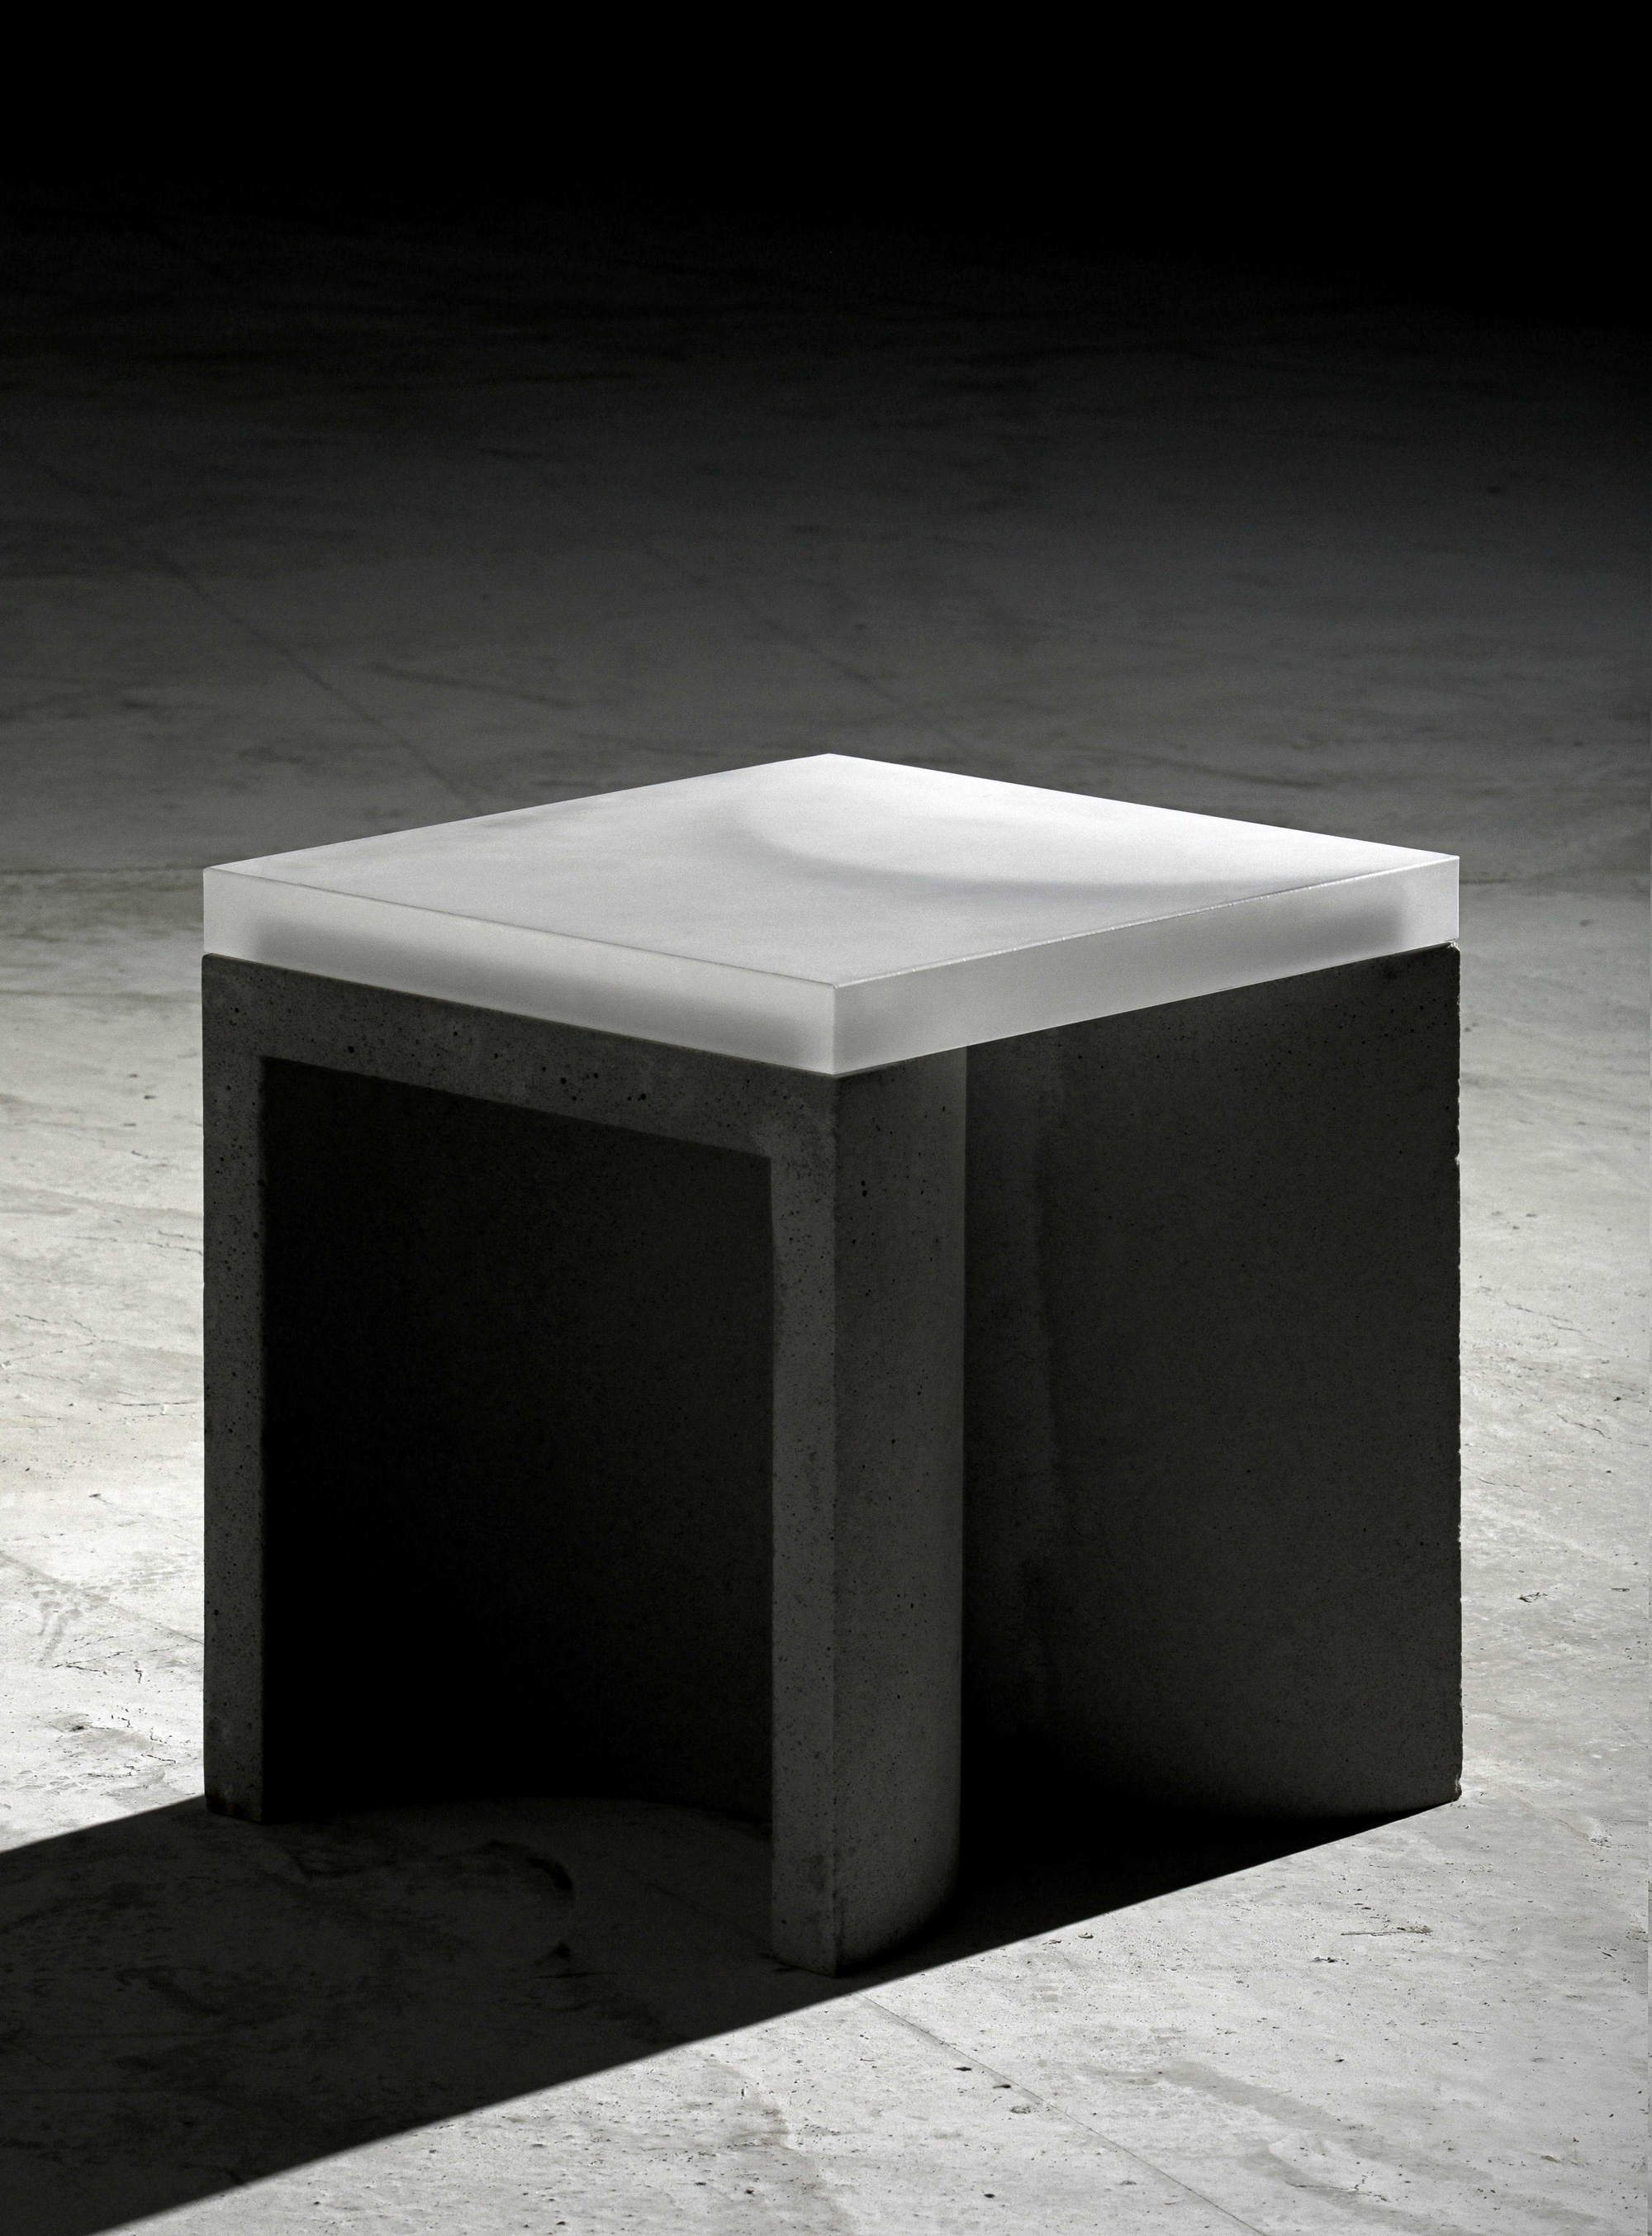 Modular concrete furniture, cube stool